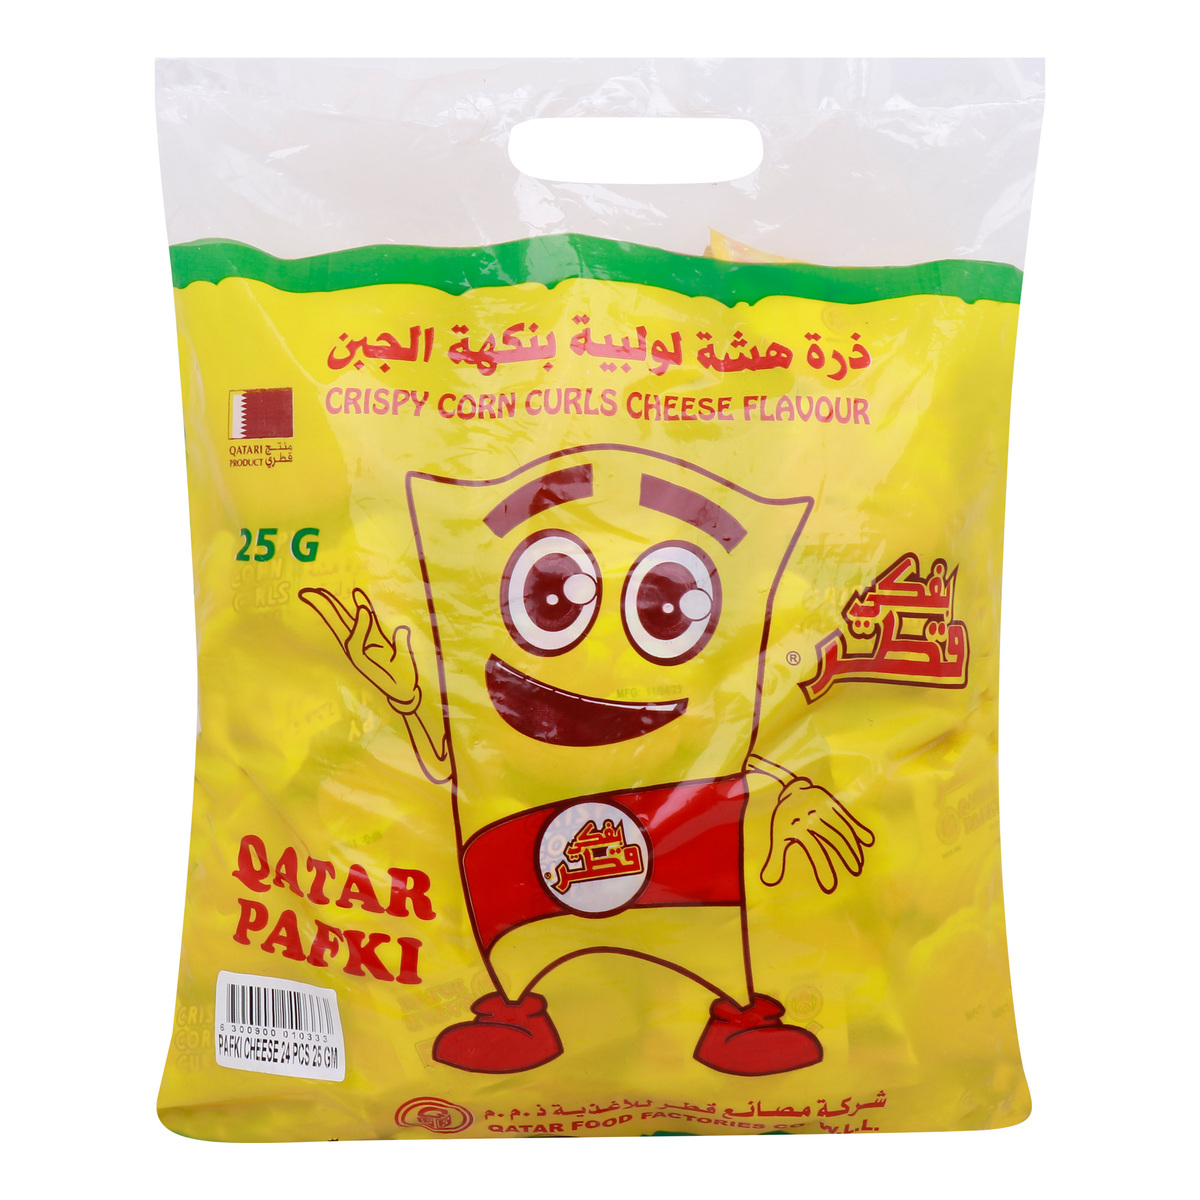 Qatar Pafki Crispy Corn Curls Cheese Flavour 25 g